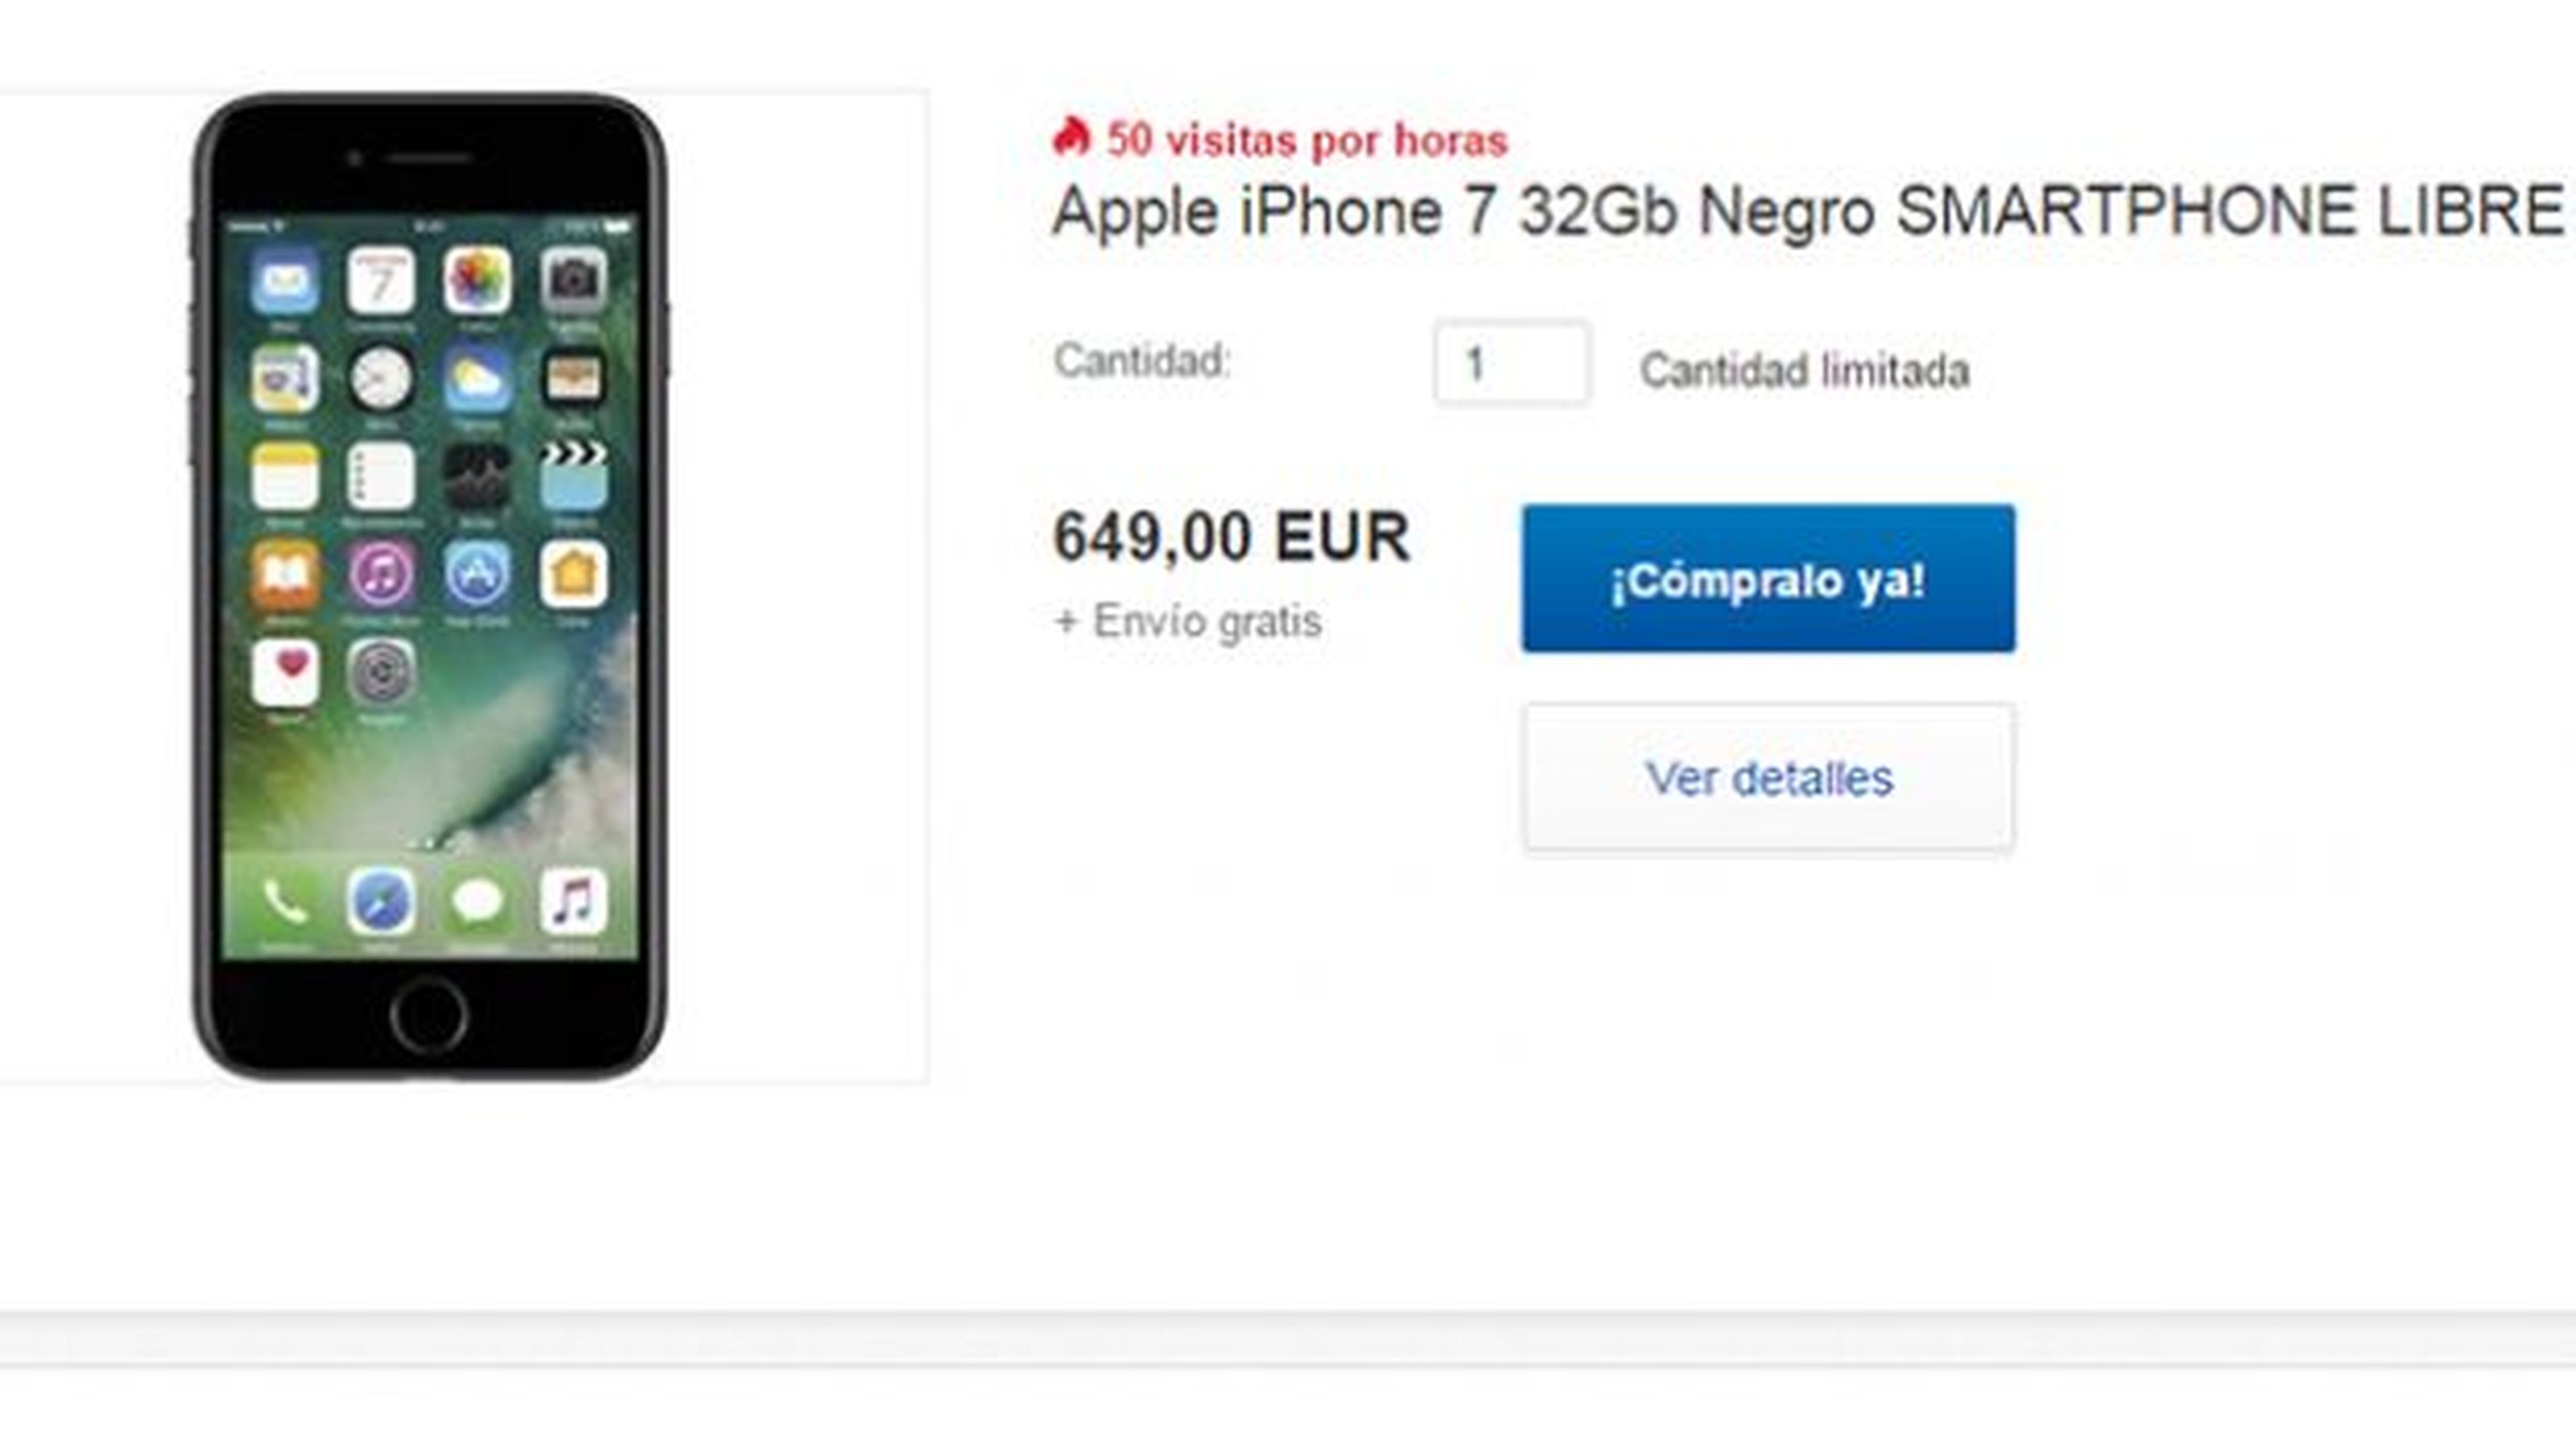 Las mejores ofertas en iPhone 7 Plus